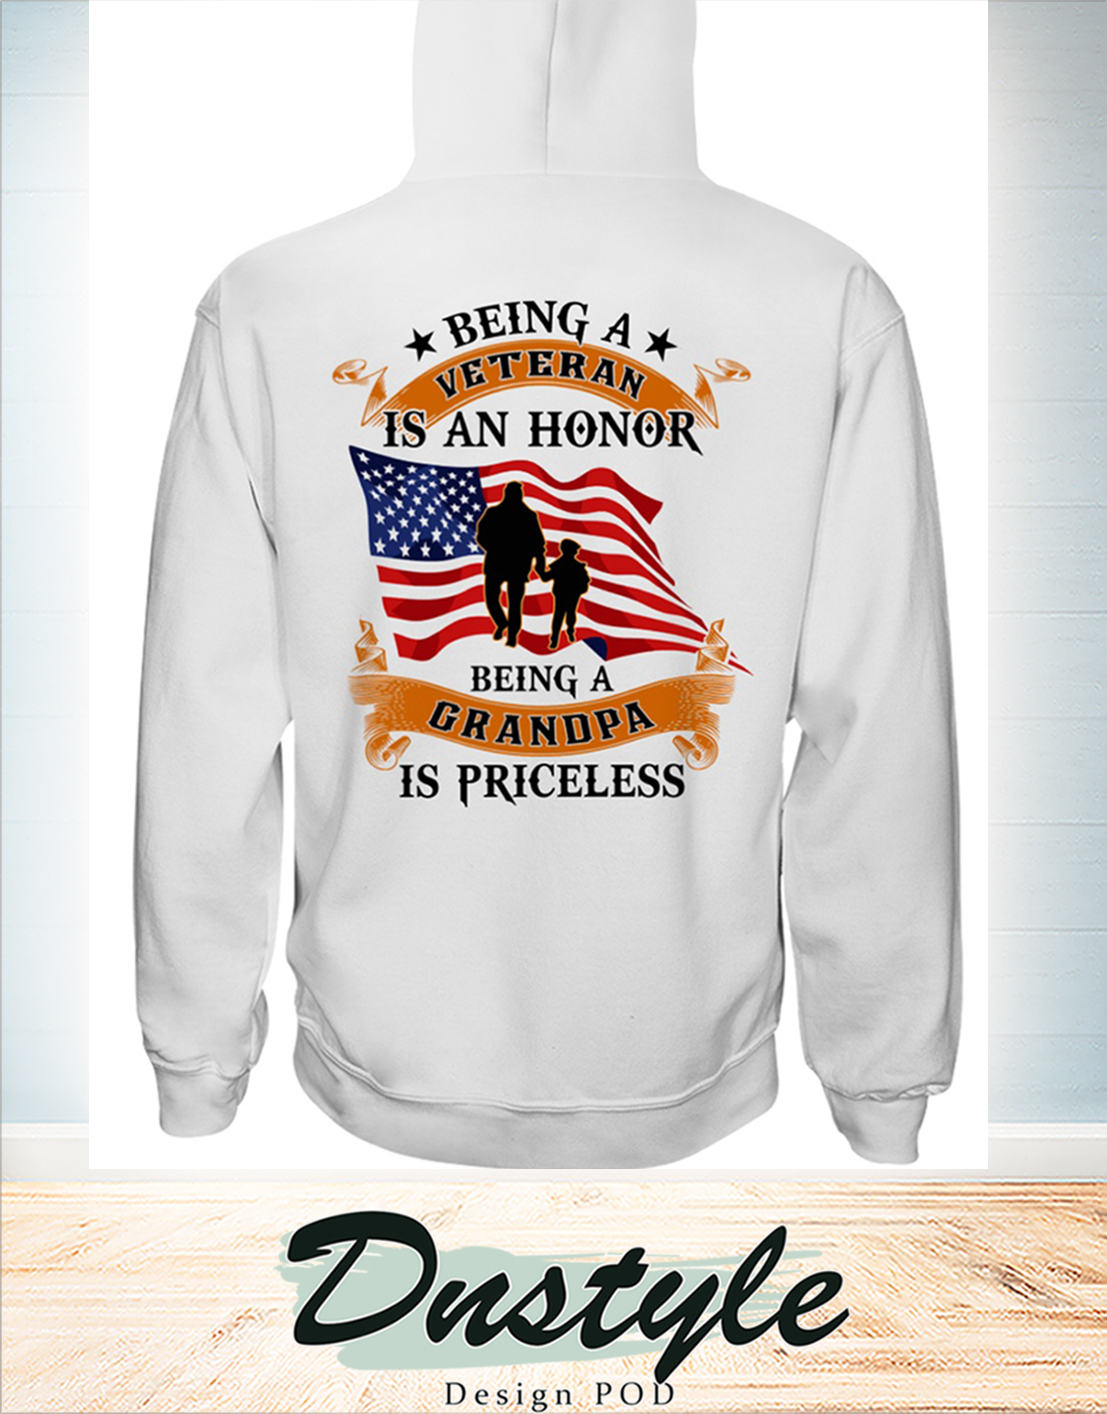 Being a veteran is an honor being a grandpa is priceless hoodie